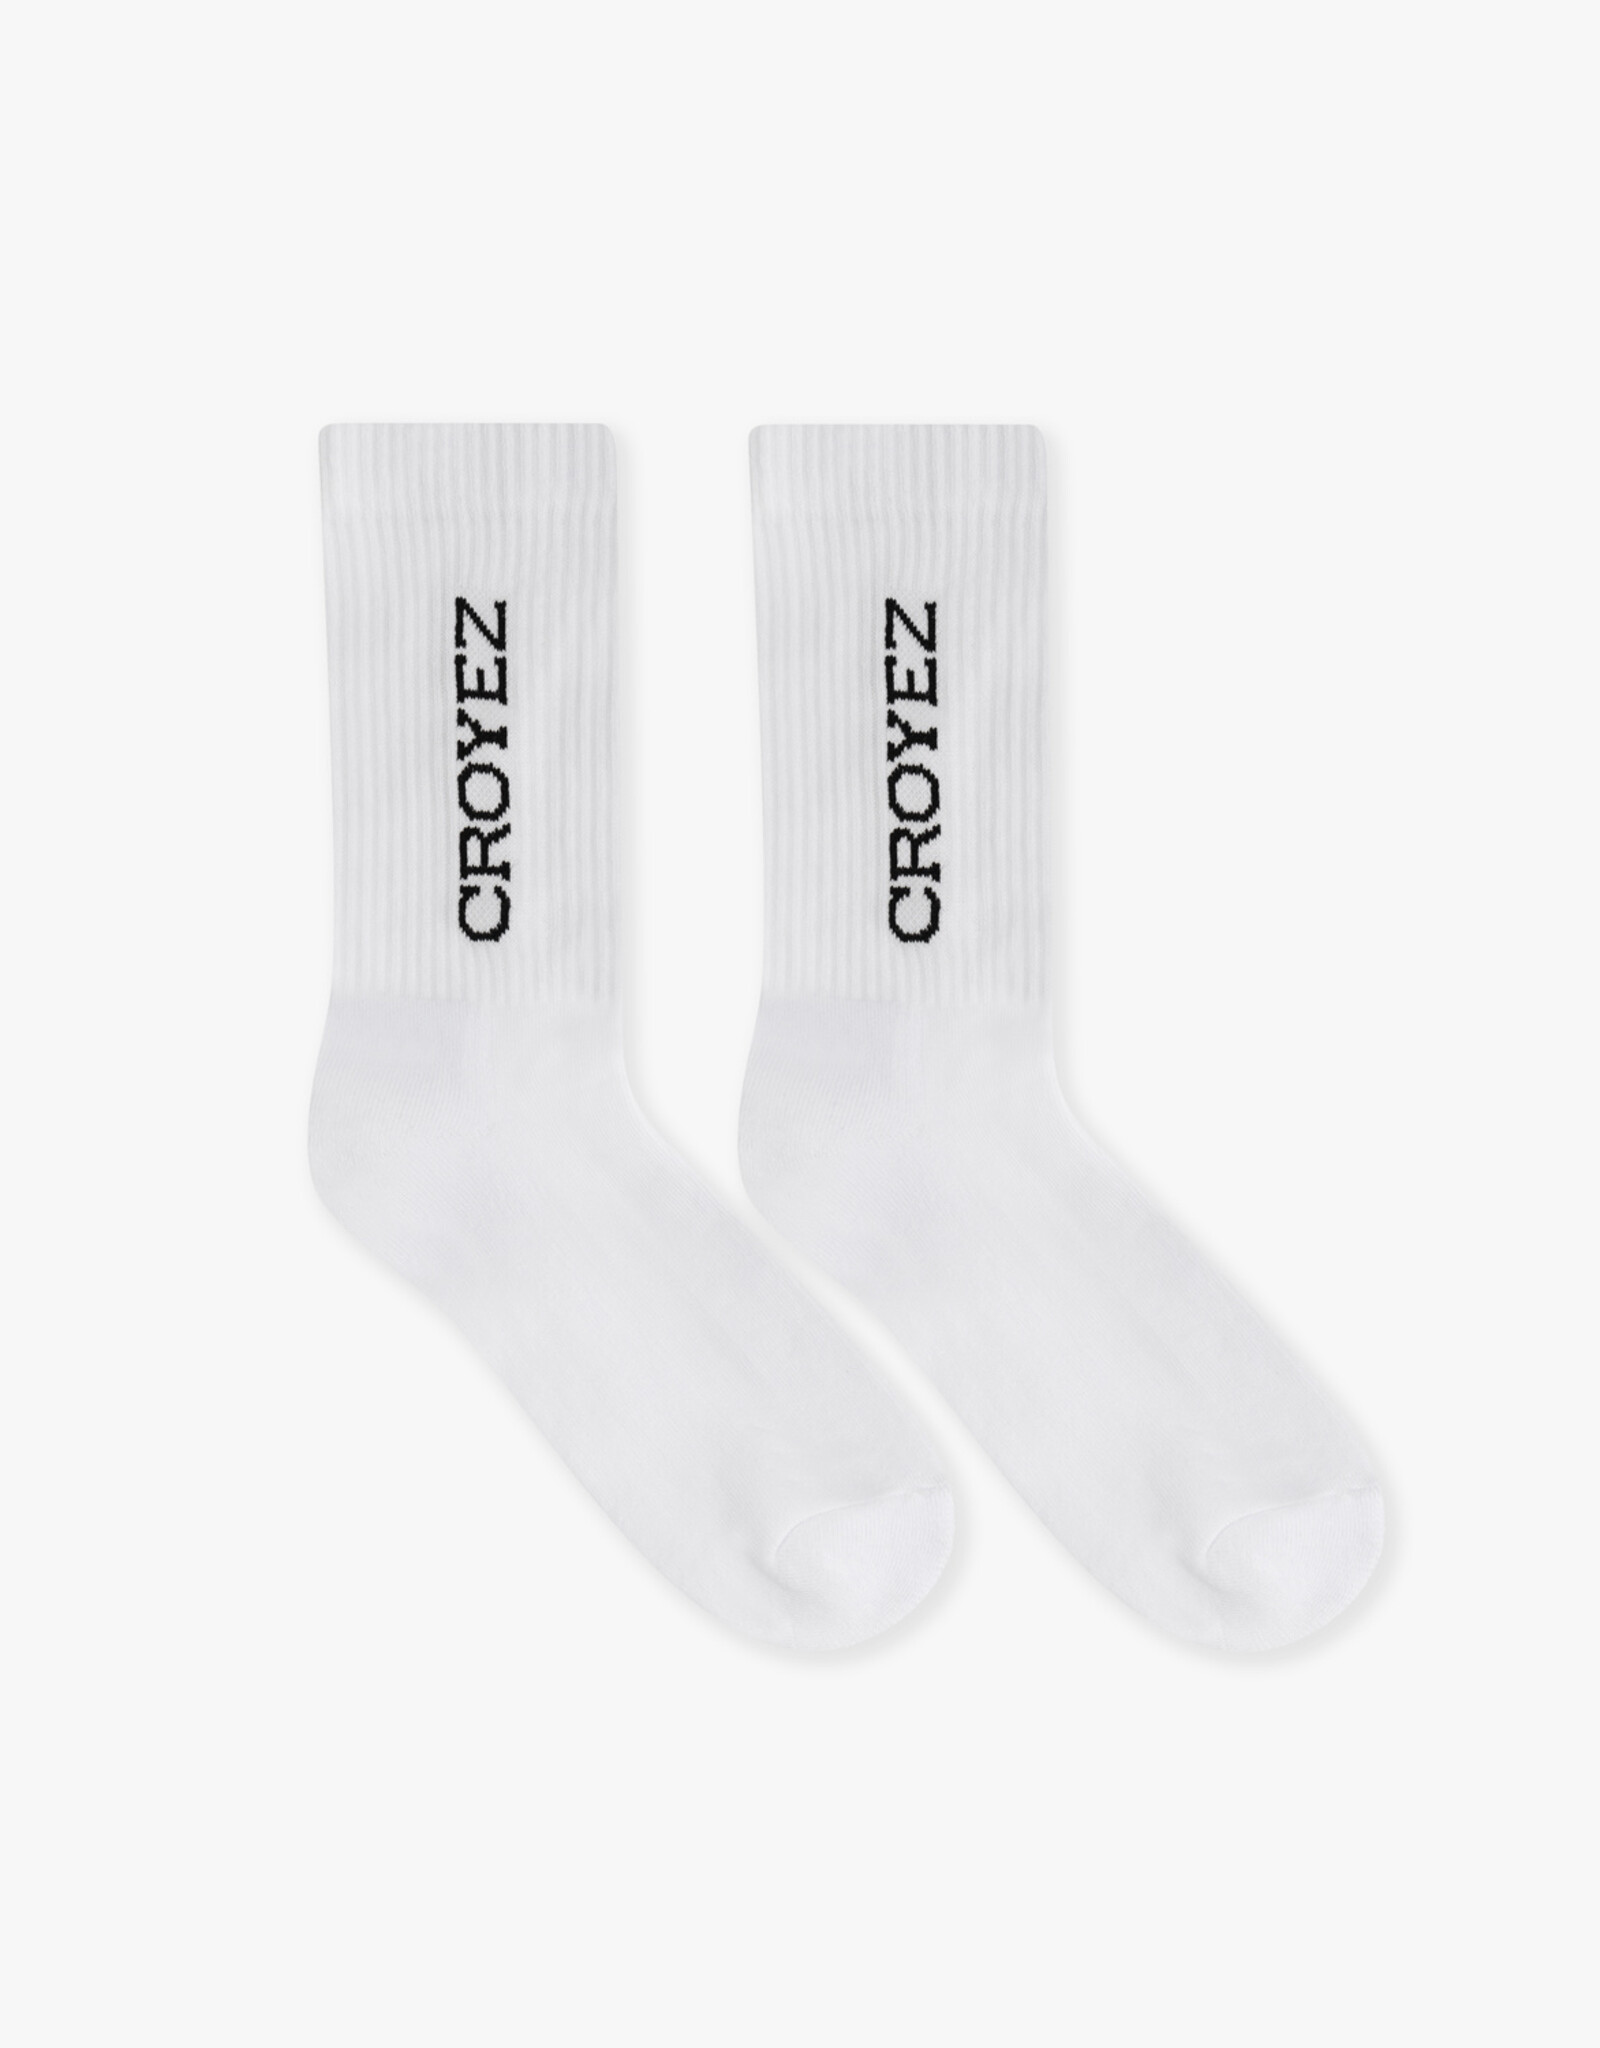 Croyez Abstract Socks 2-Pack